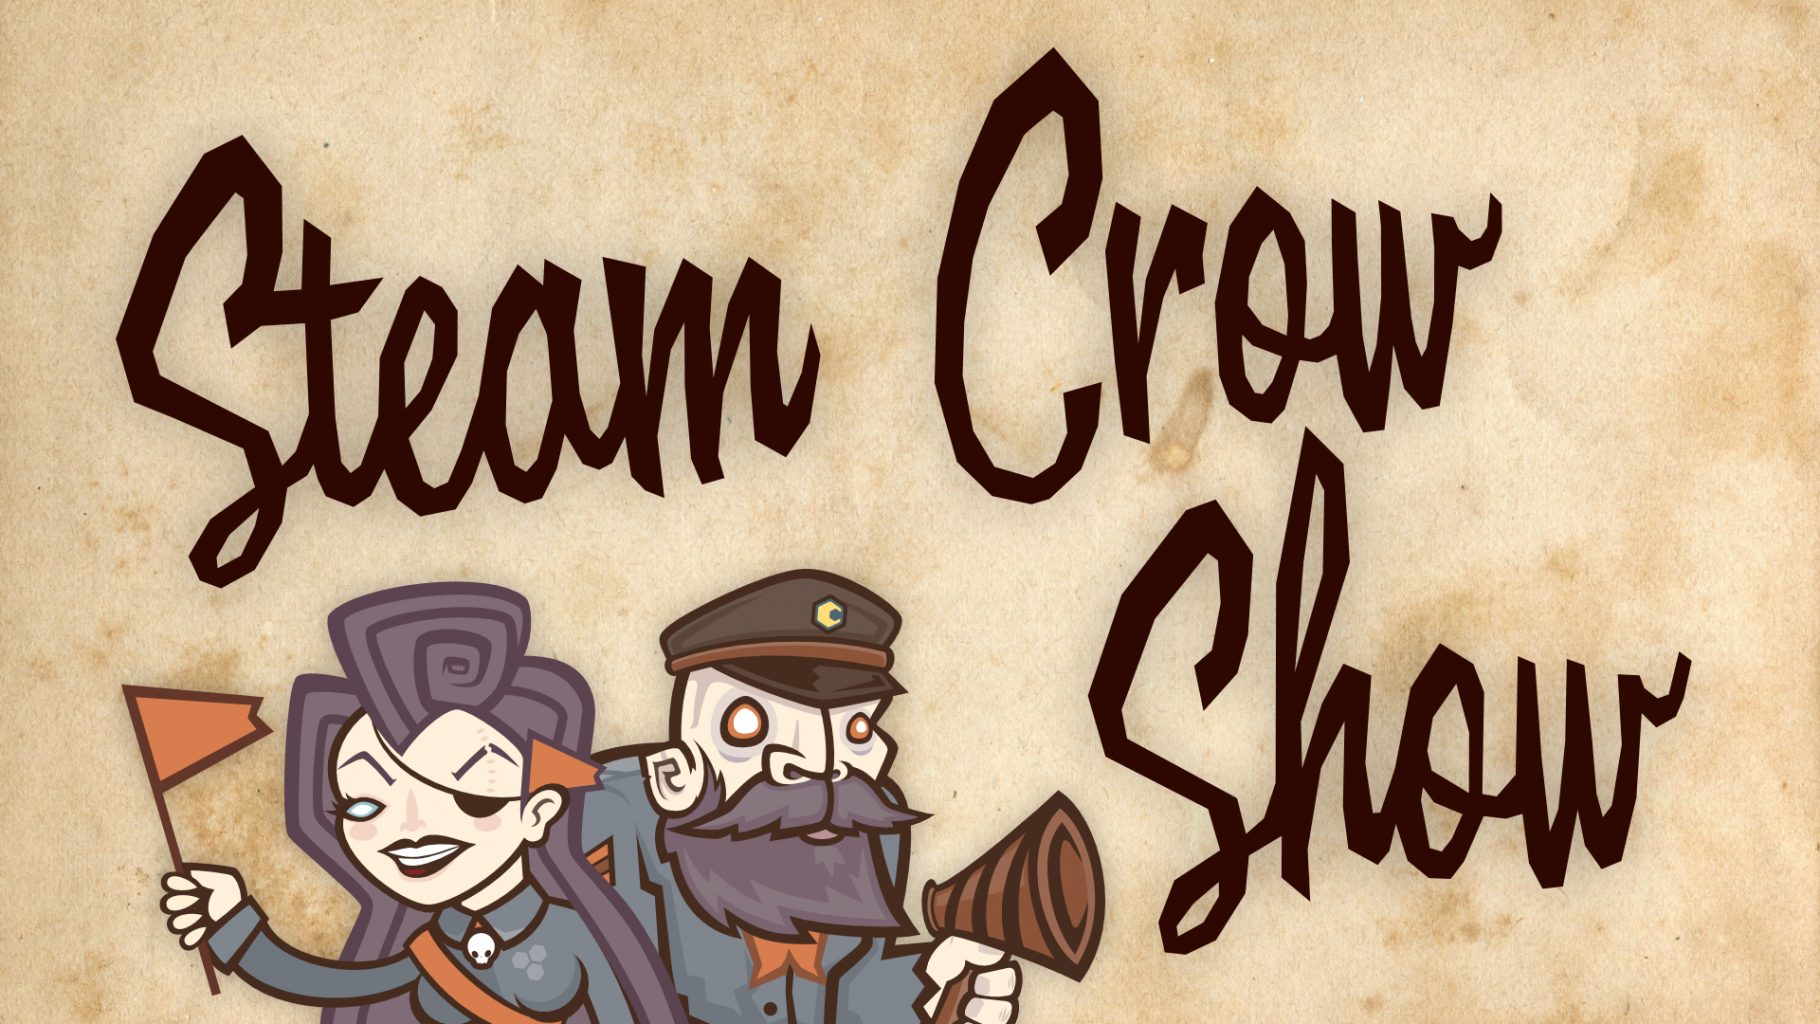 Crow steam